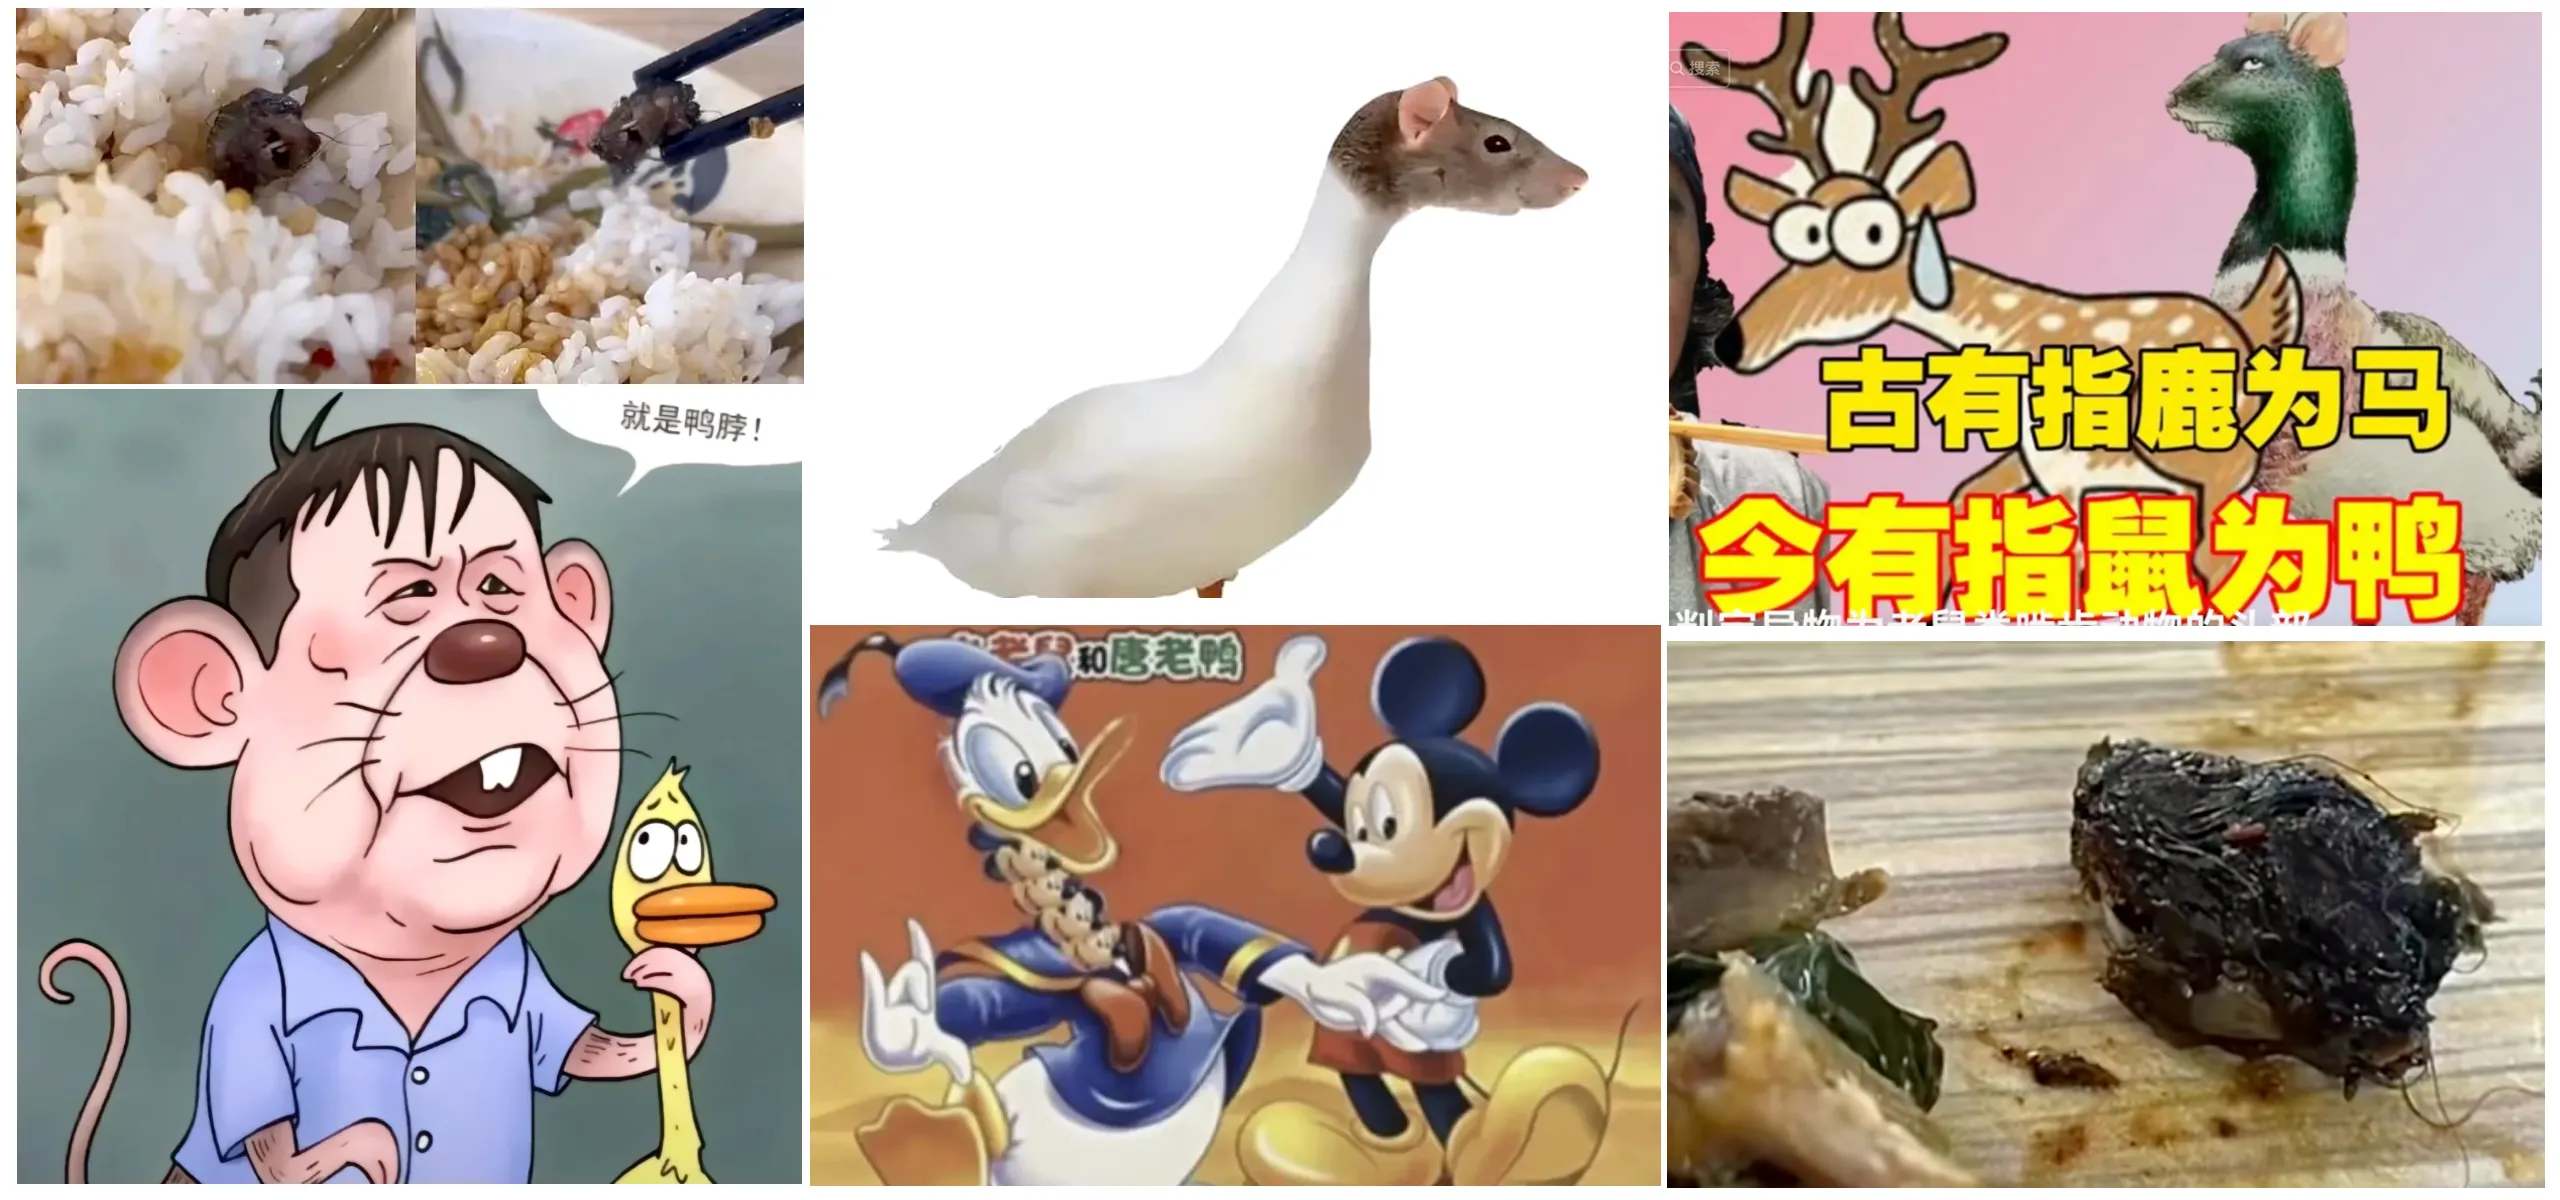 Rat meme collage